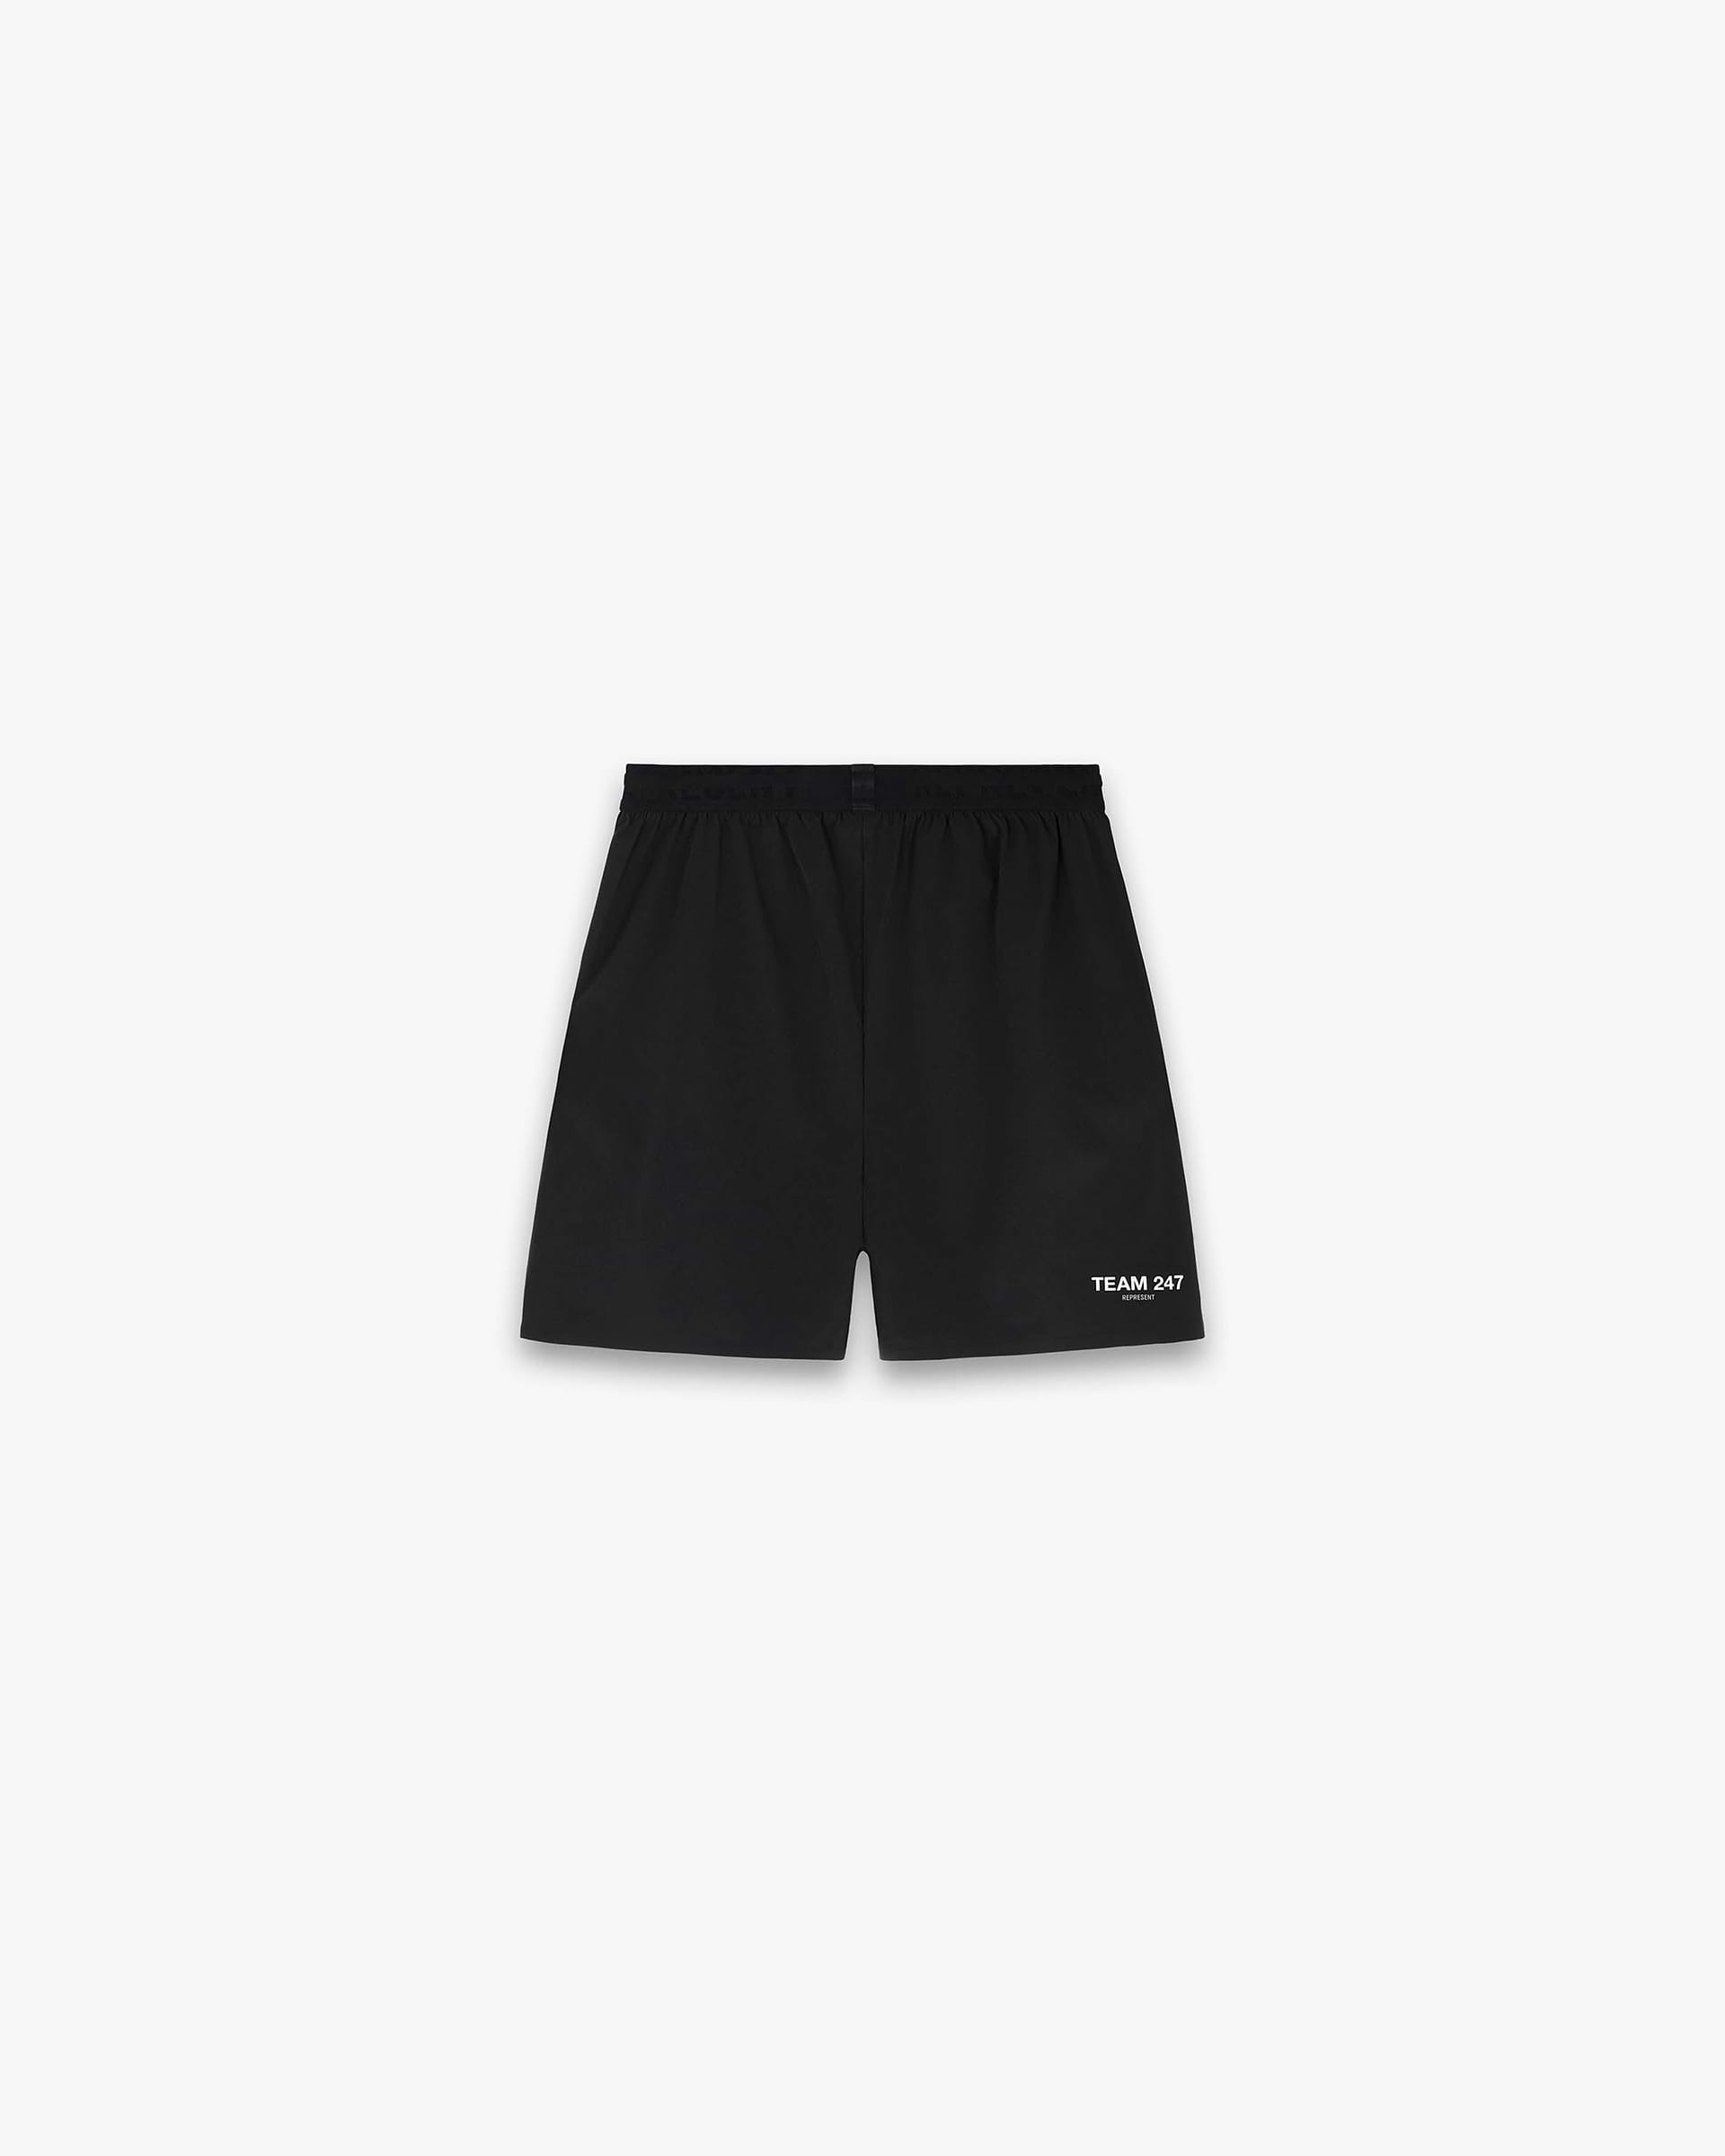 Team 247 Fused Shorts X WIT - Black